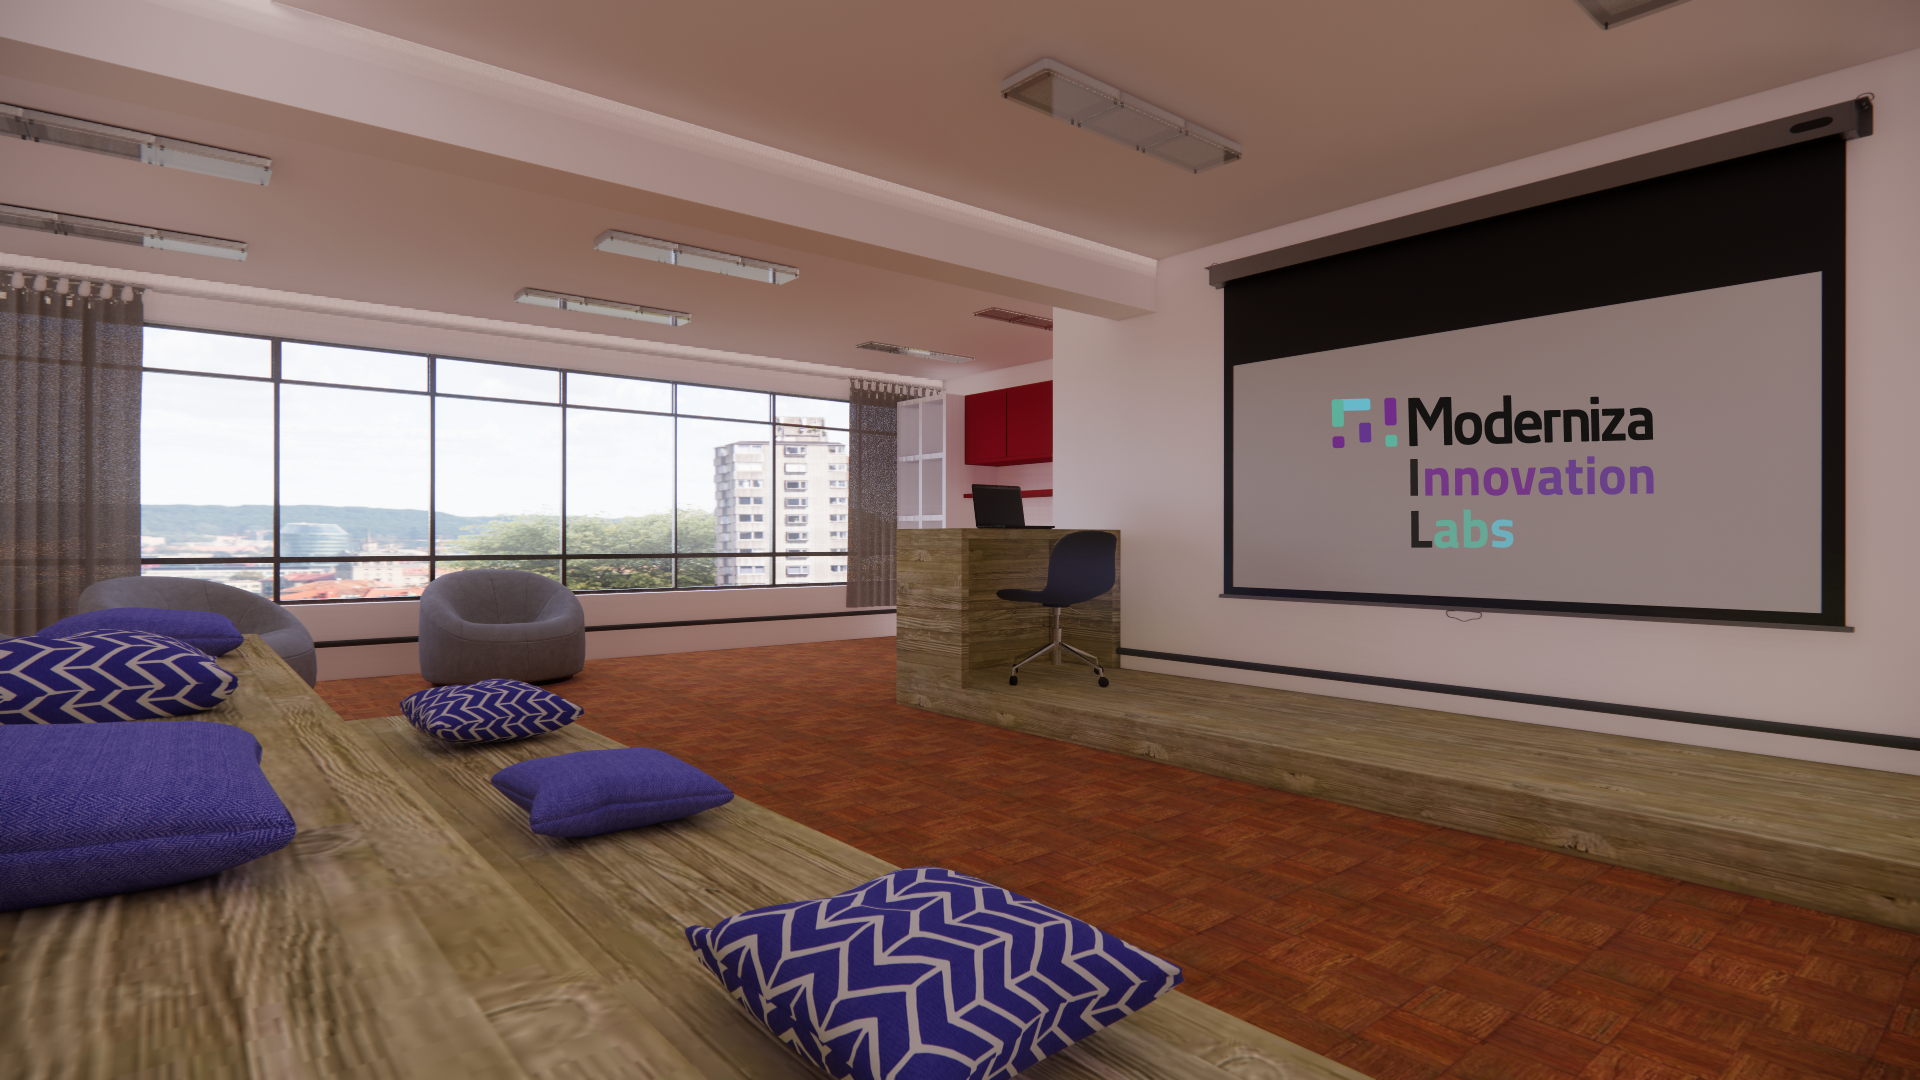 Moderniza Innovation Labs Arena